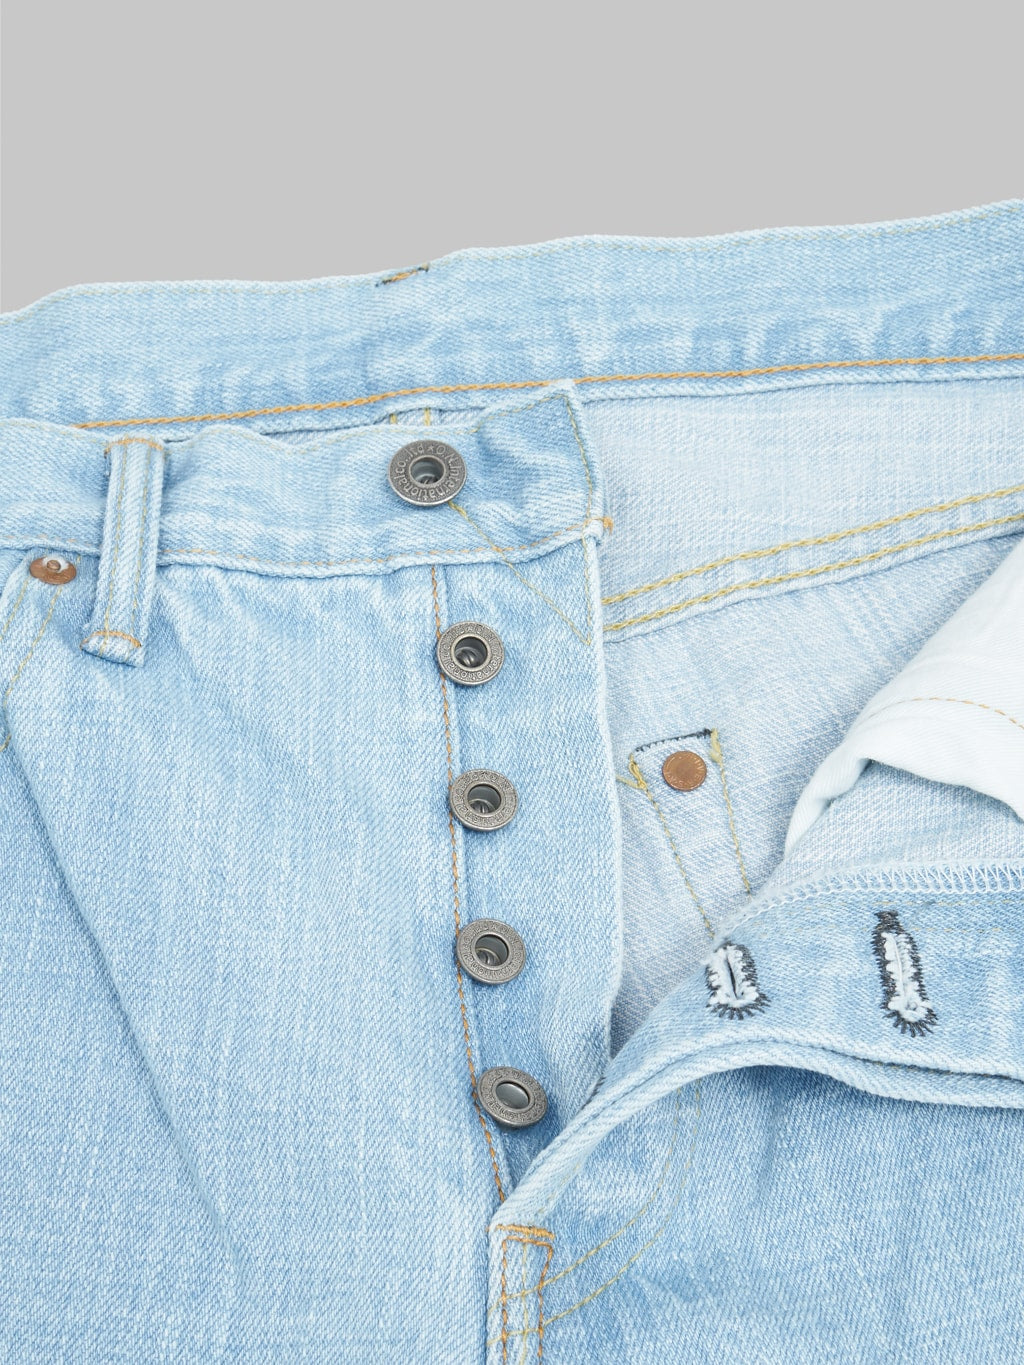 redcast heritage x oni denim kerama blue 15oz selvedge jeans buttons